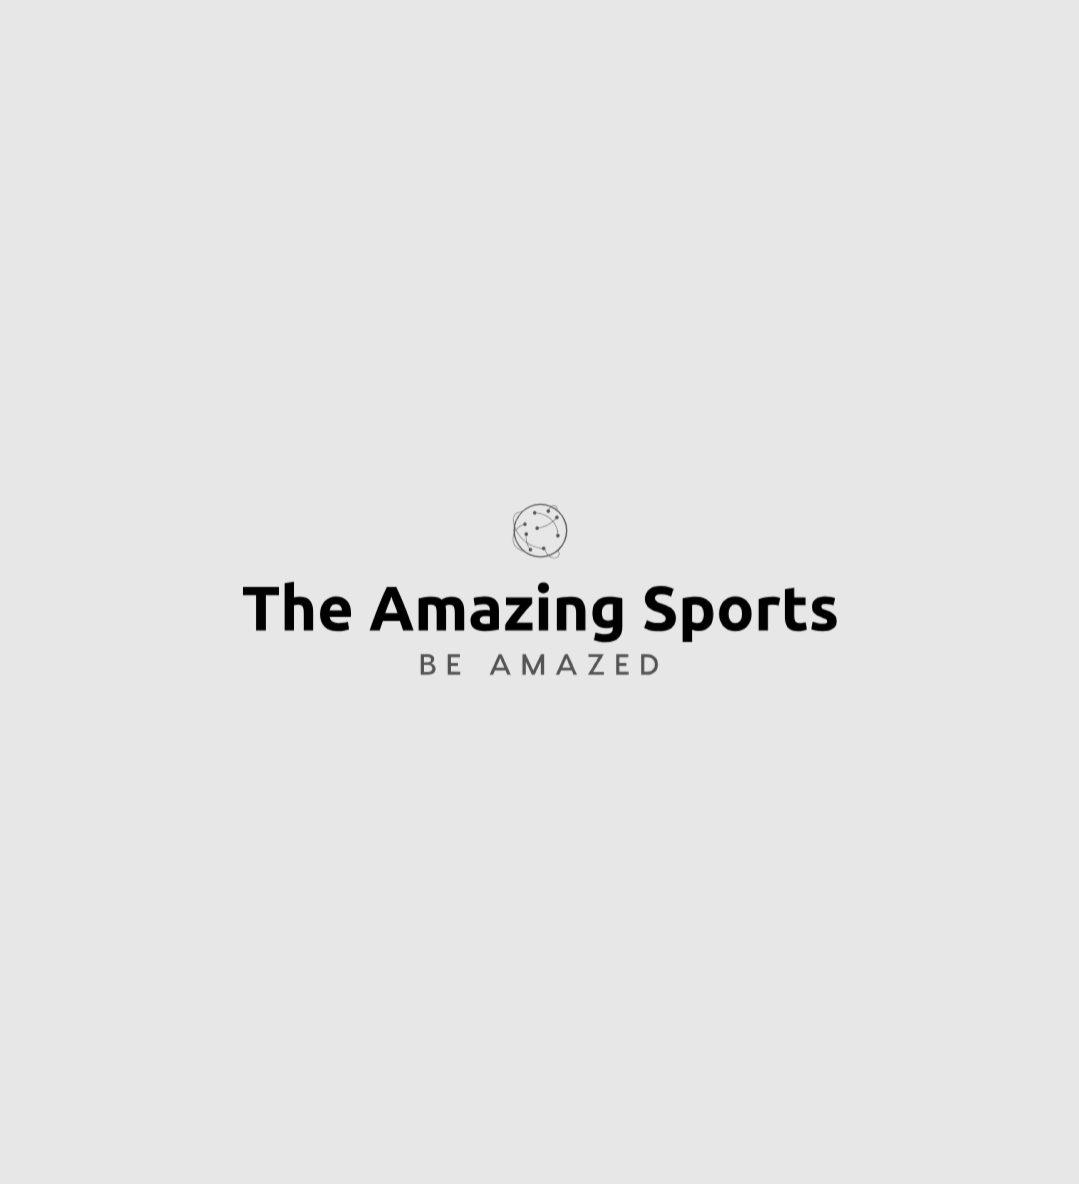 The Amazing Sports